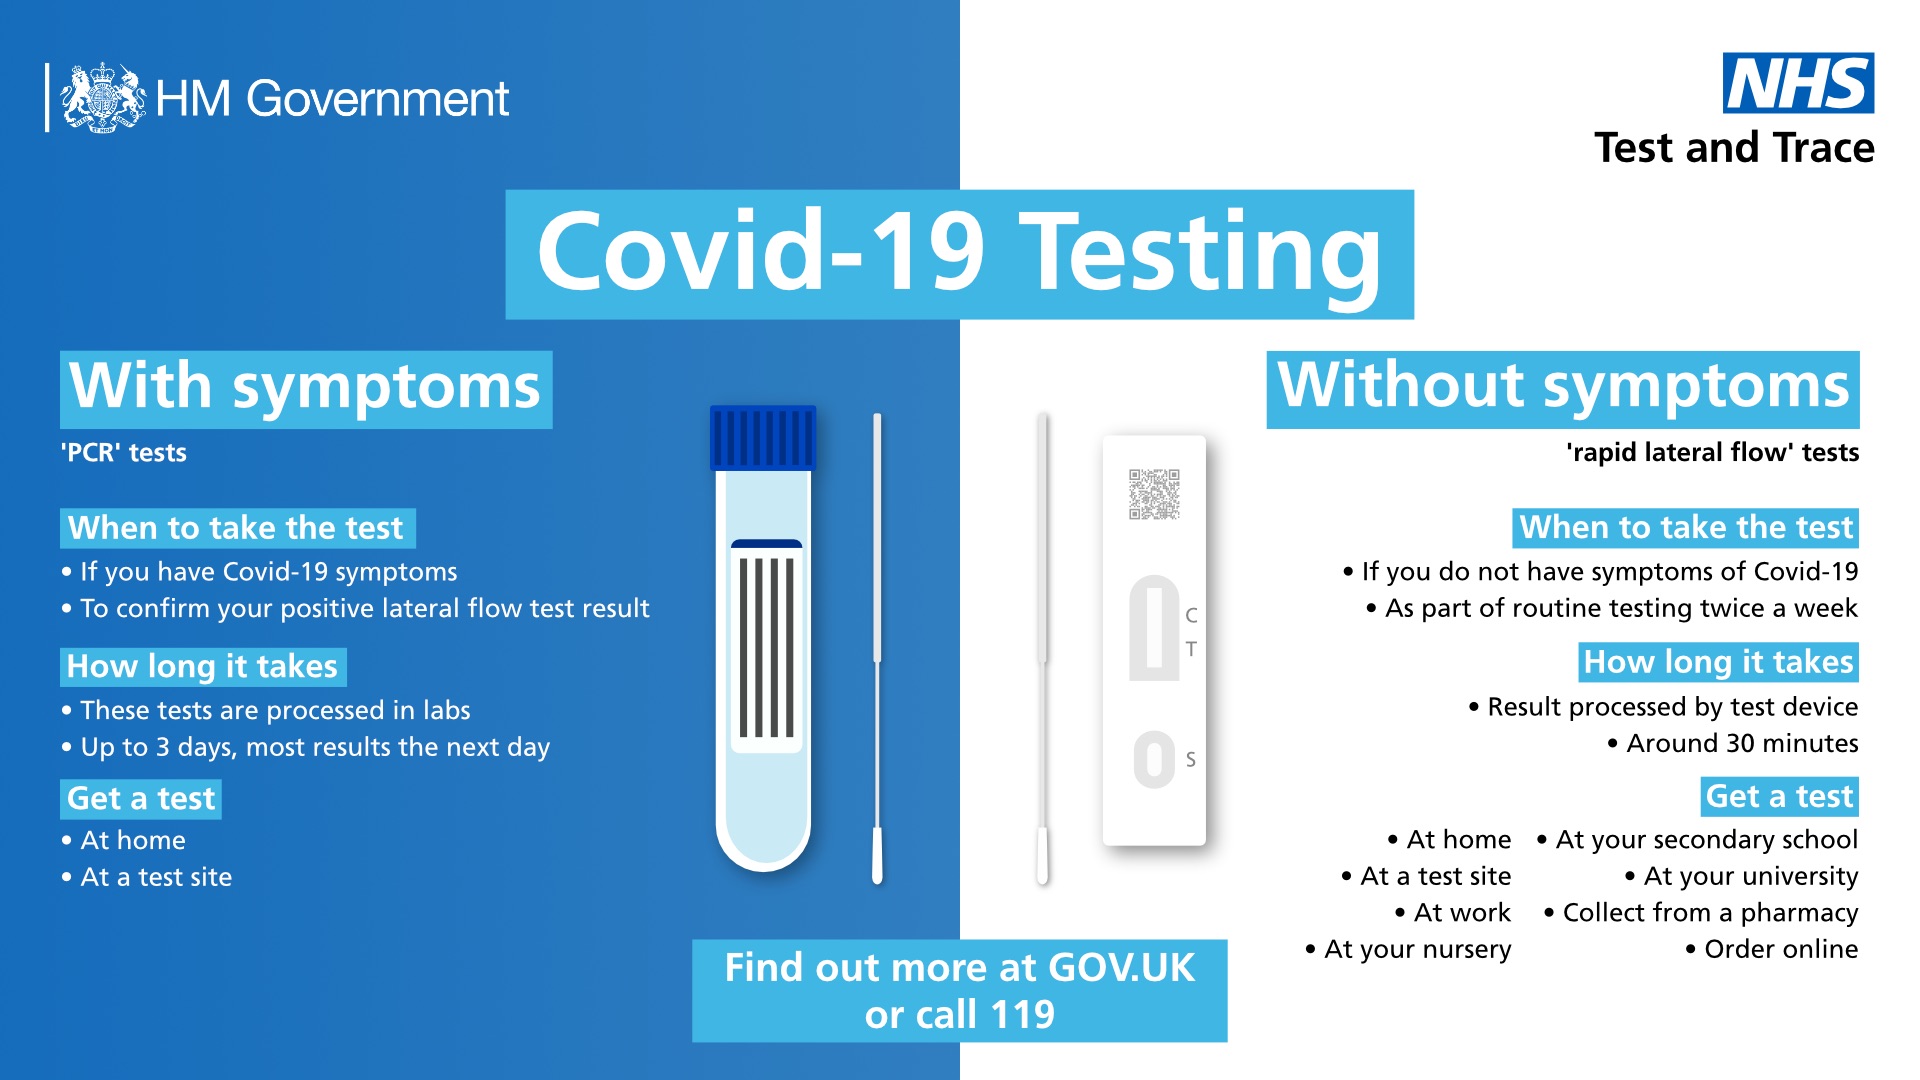 Covid-19 tests